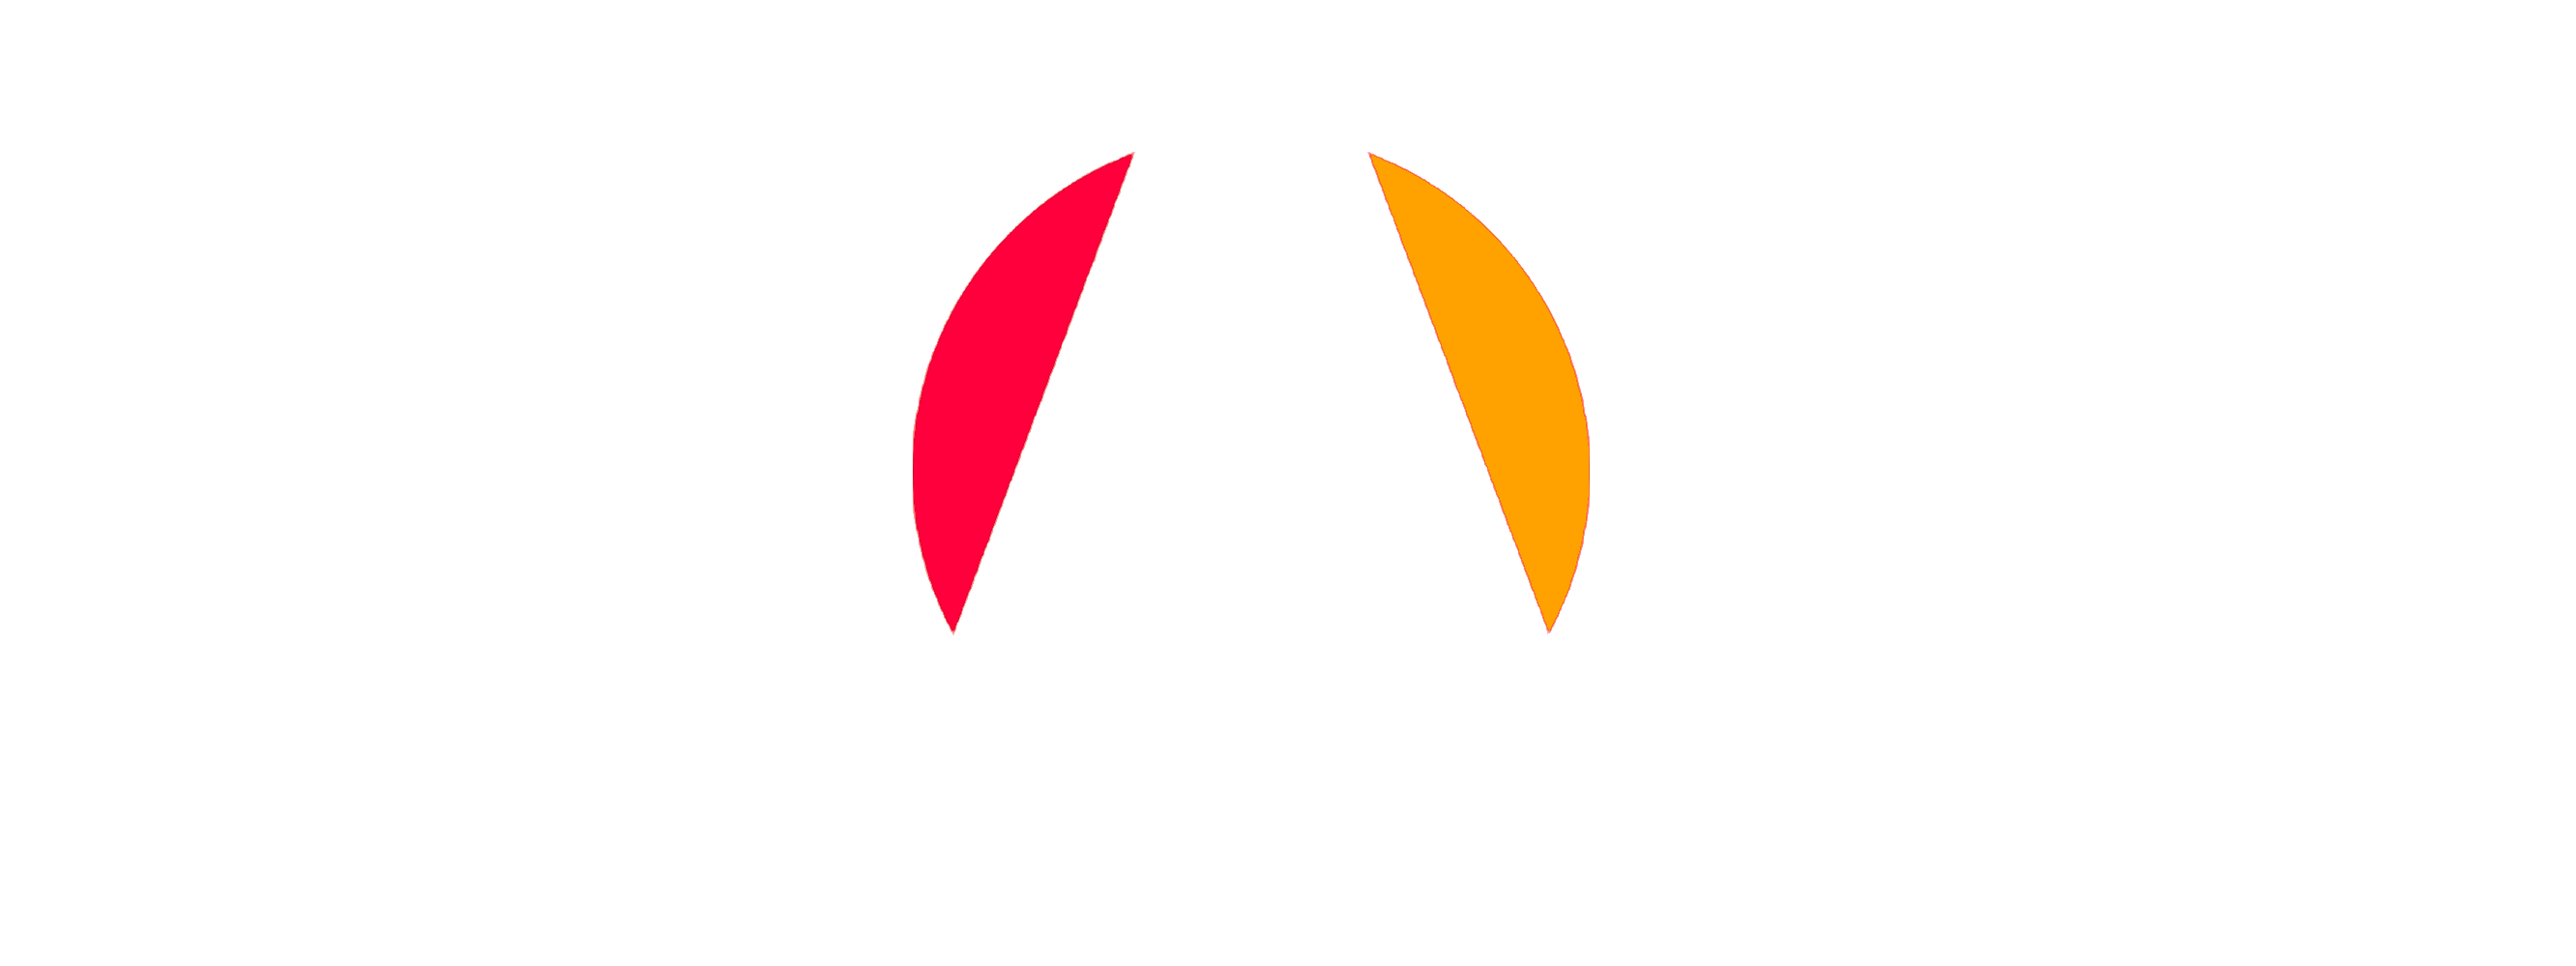 Ask Lanka